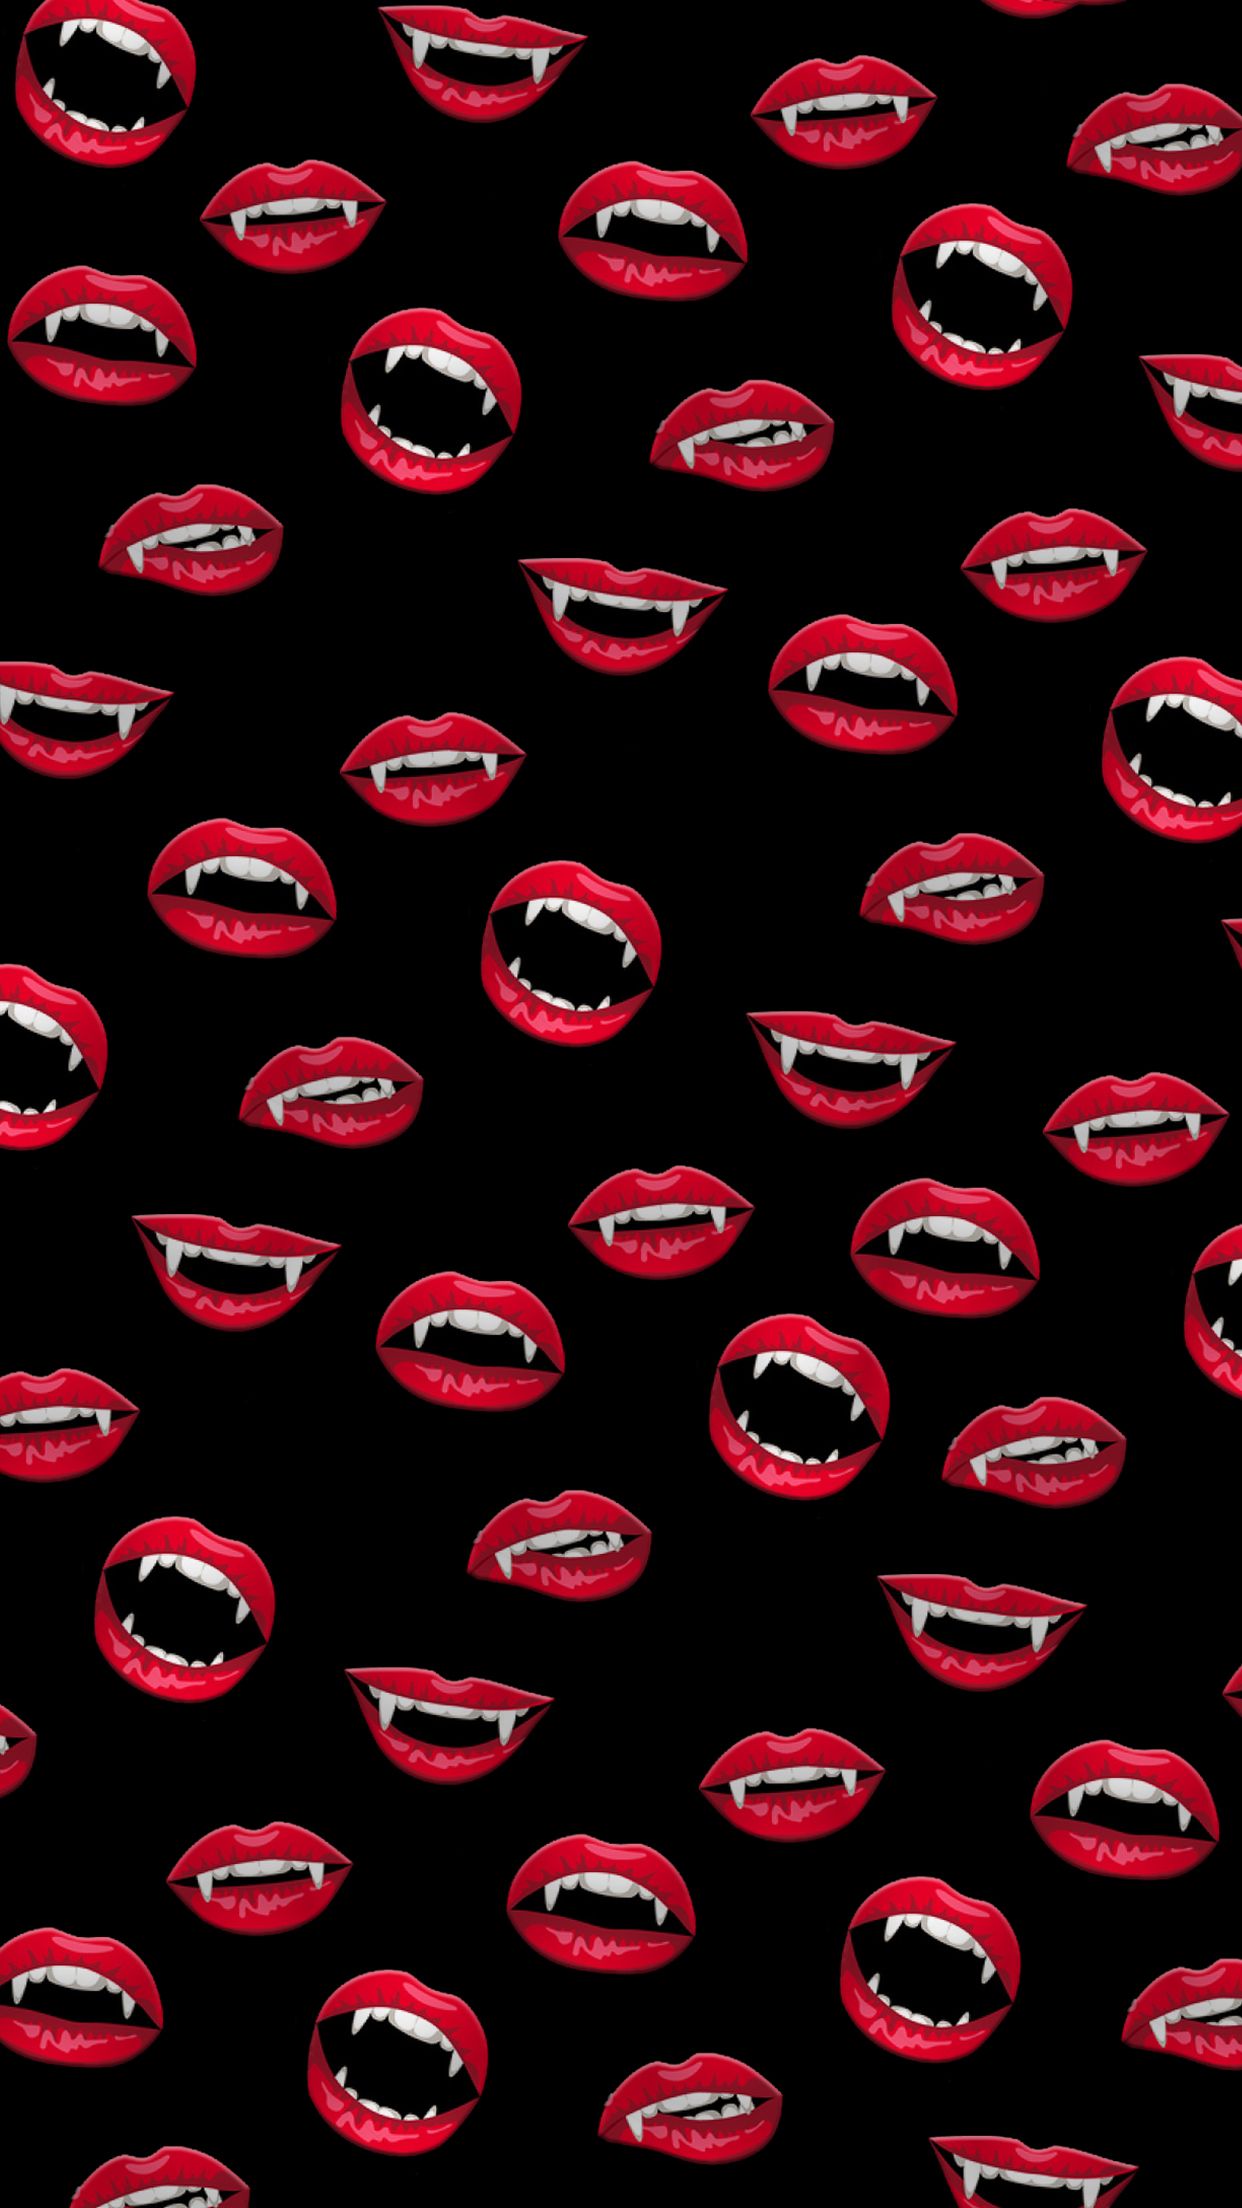 wallpaper vampire lips. Lip wallpaper, Halloween wallpaper iphone, Vampire lips